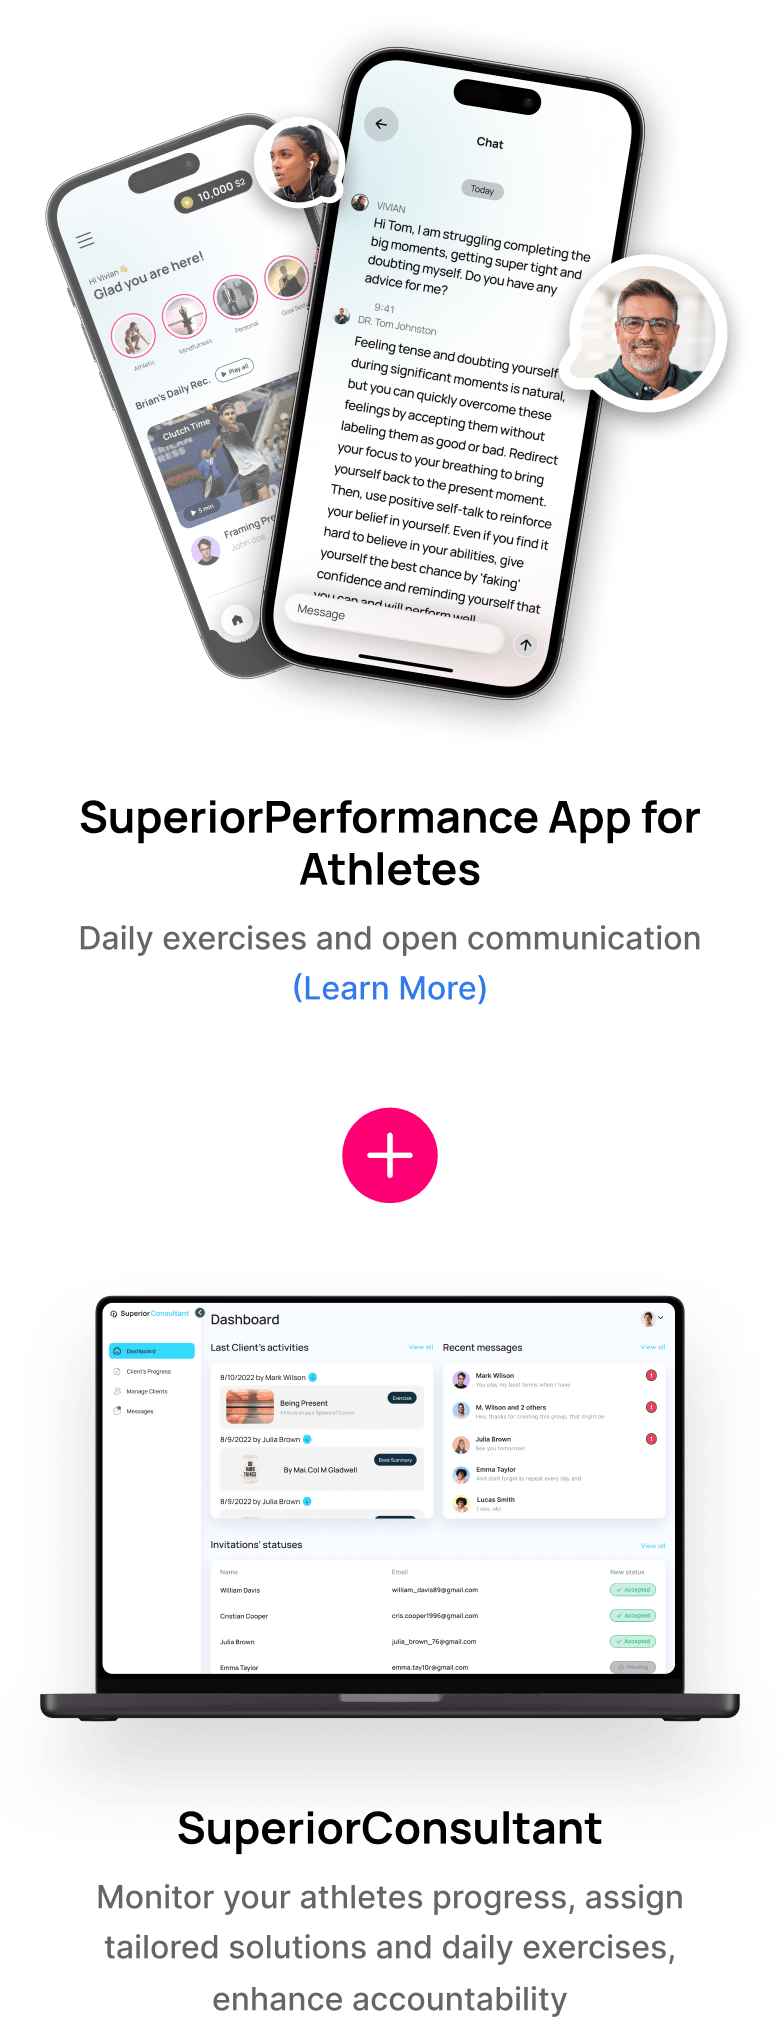 SuperiorPerformance App